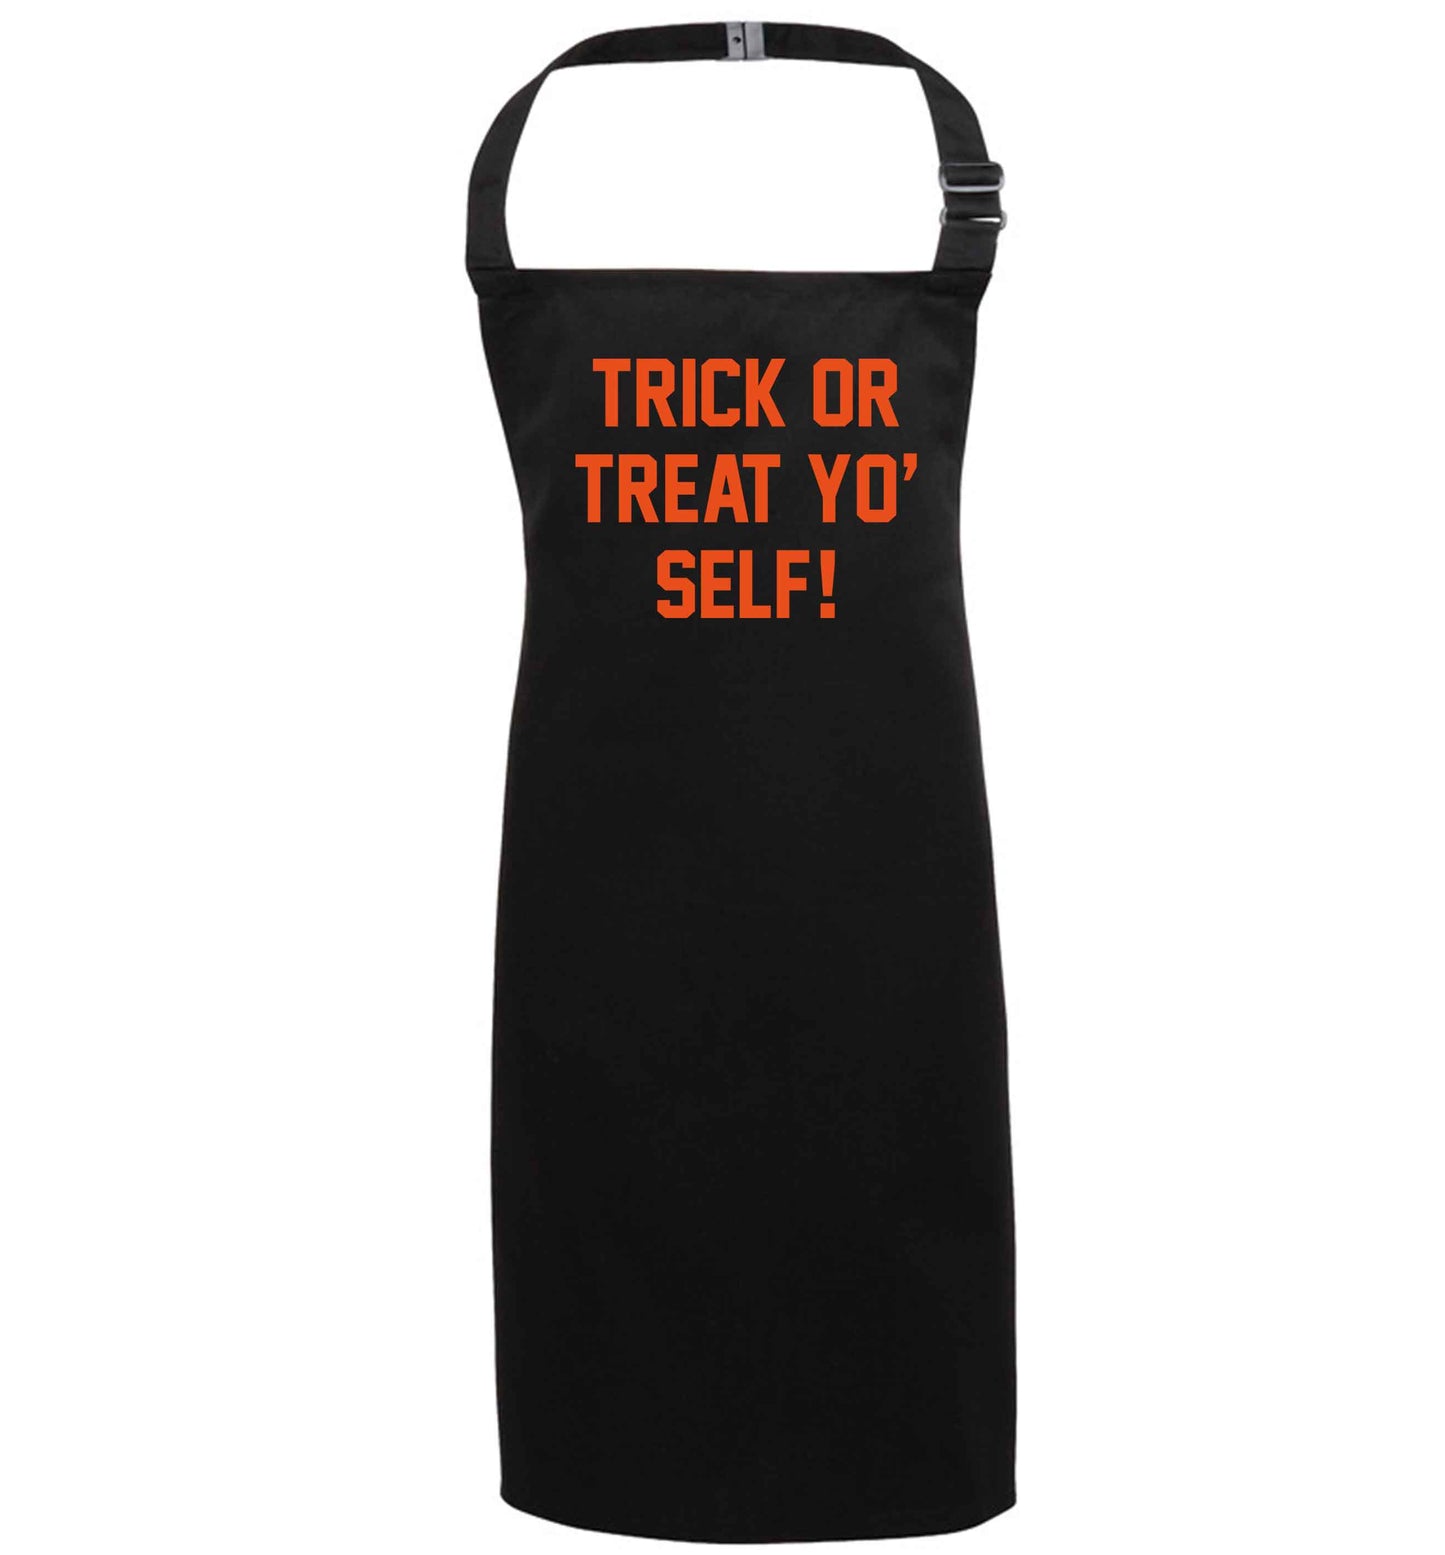 Trick or Treat Yo' Self black apron 7-10 years